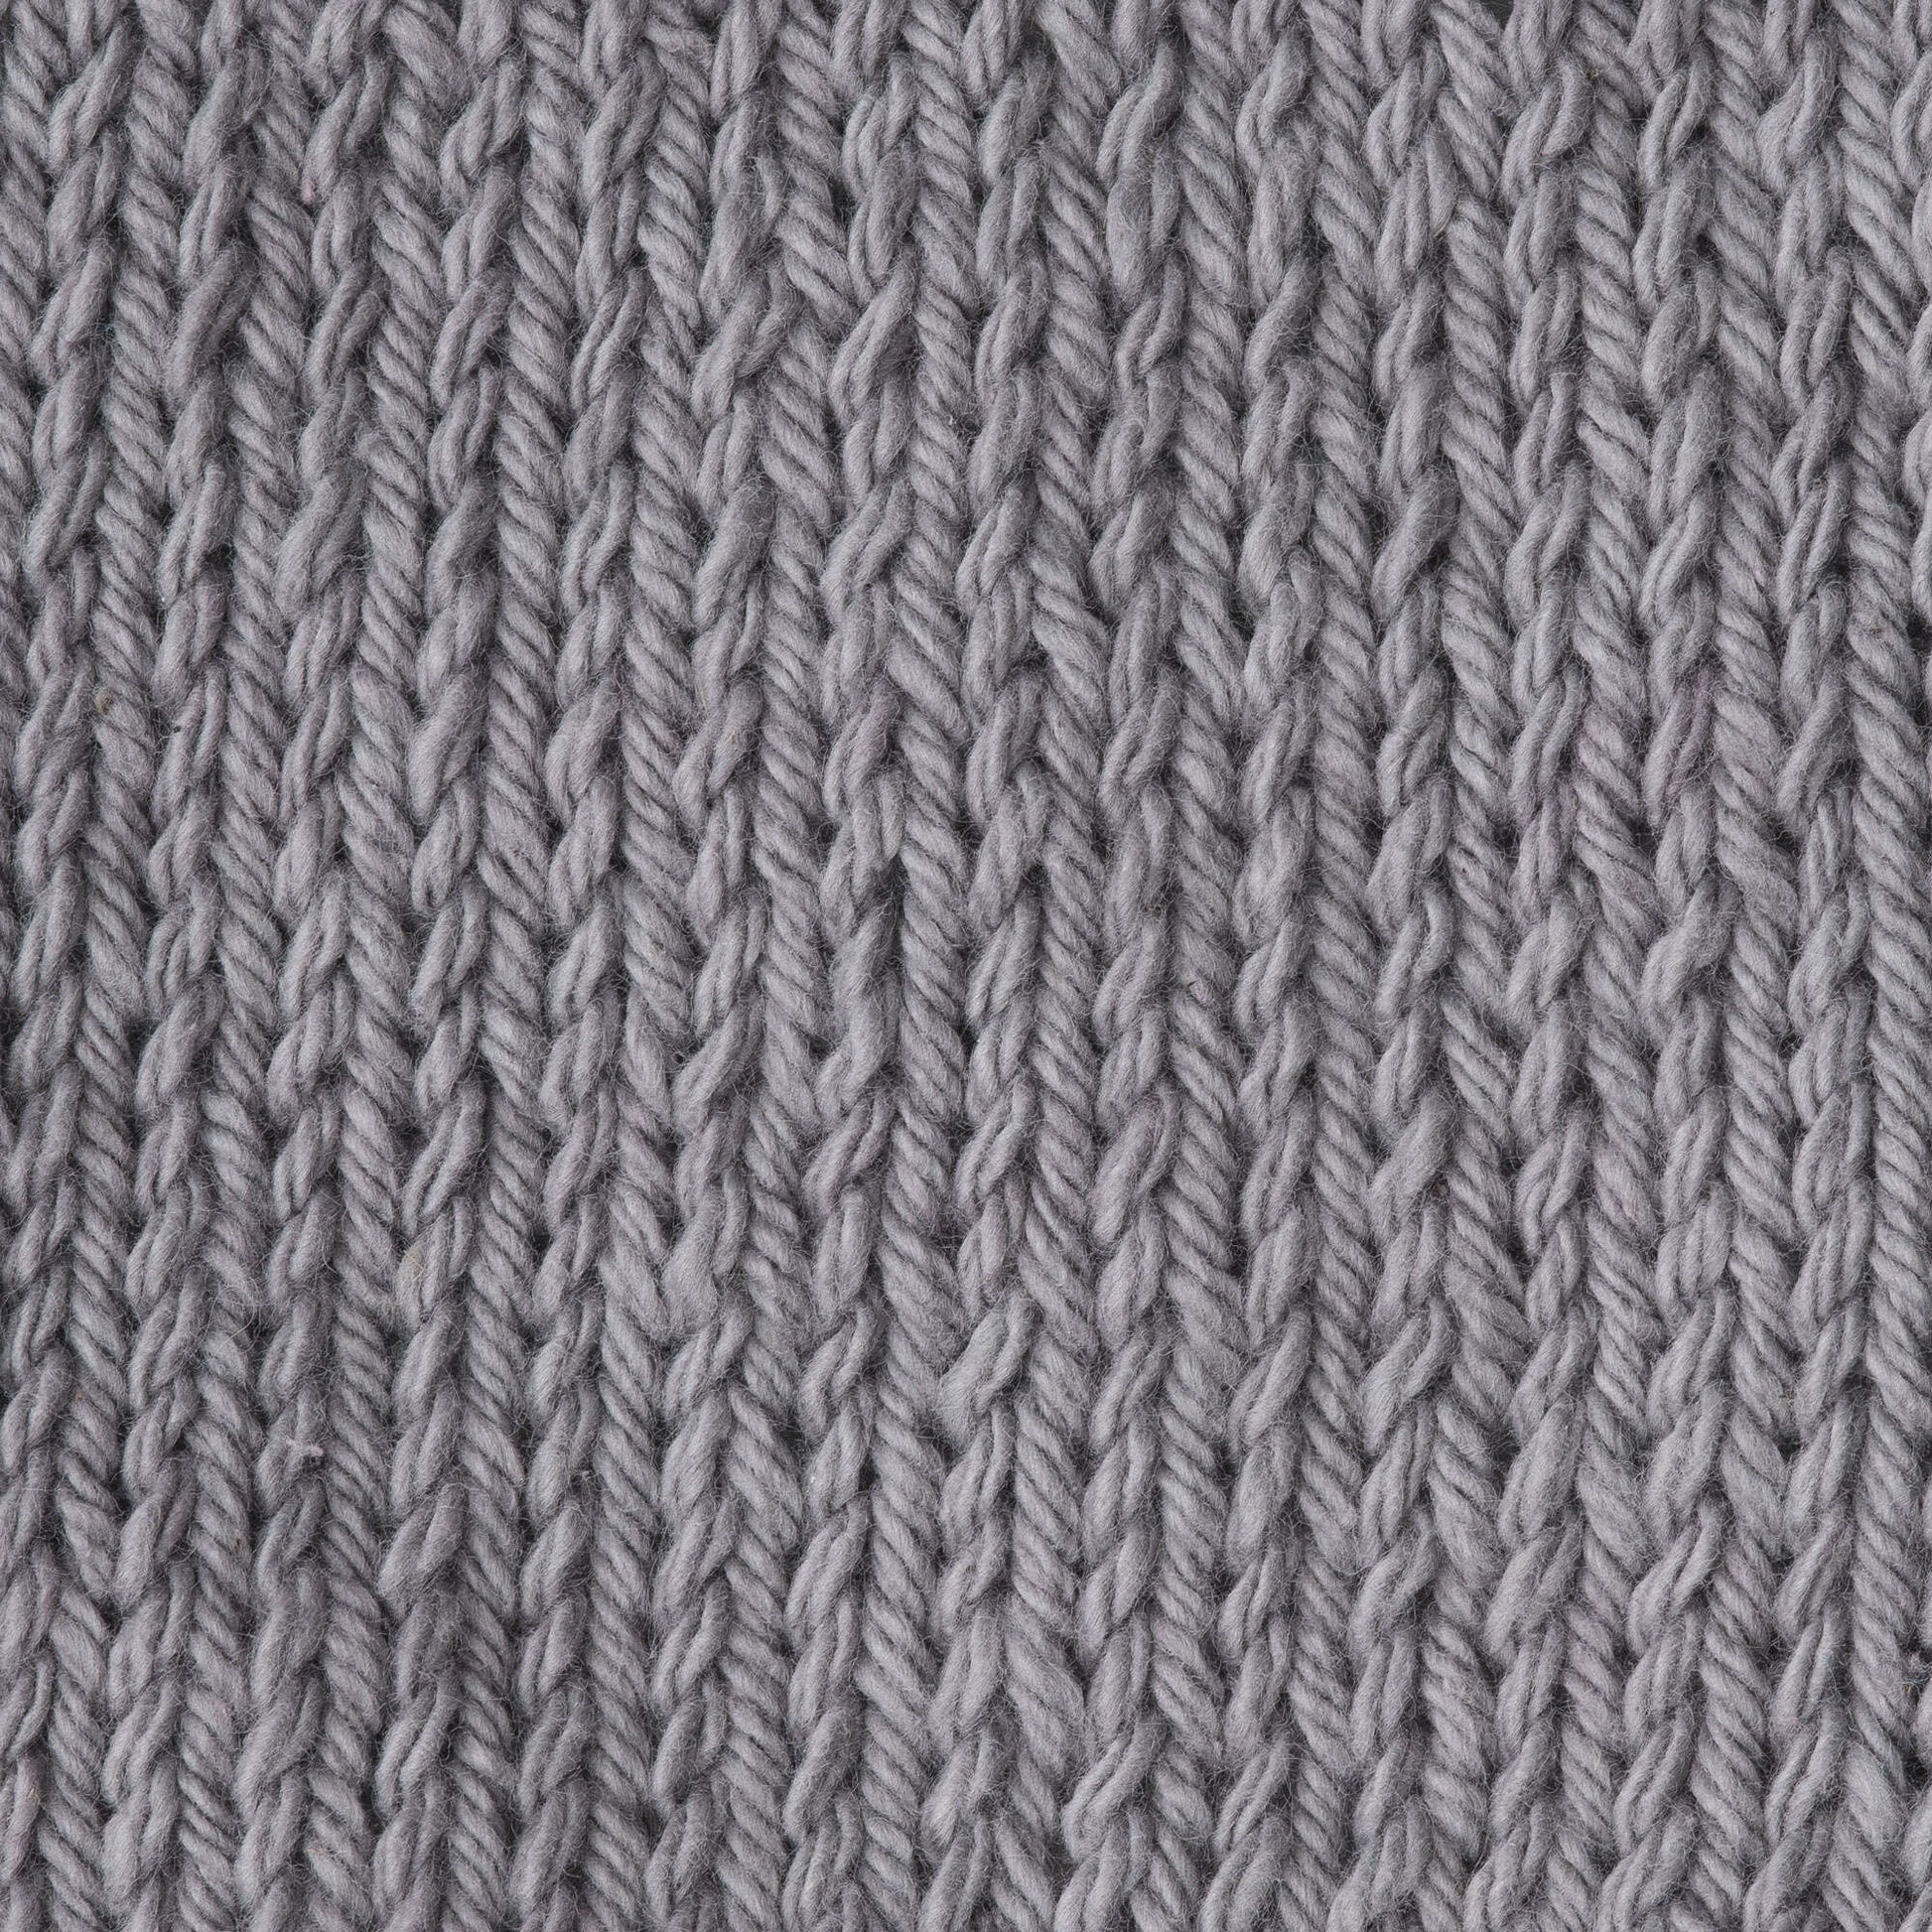 Bernat Handicrafter Cotton Yarn - Solids-Black Licorice